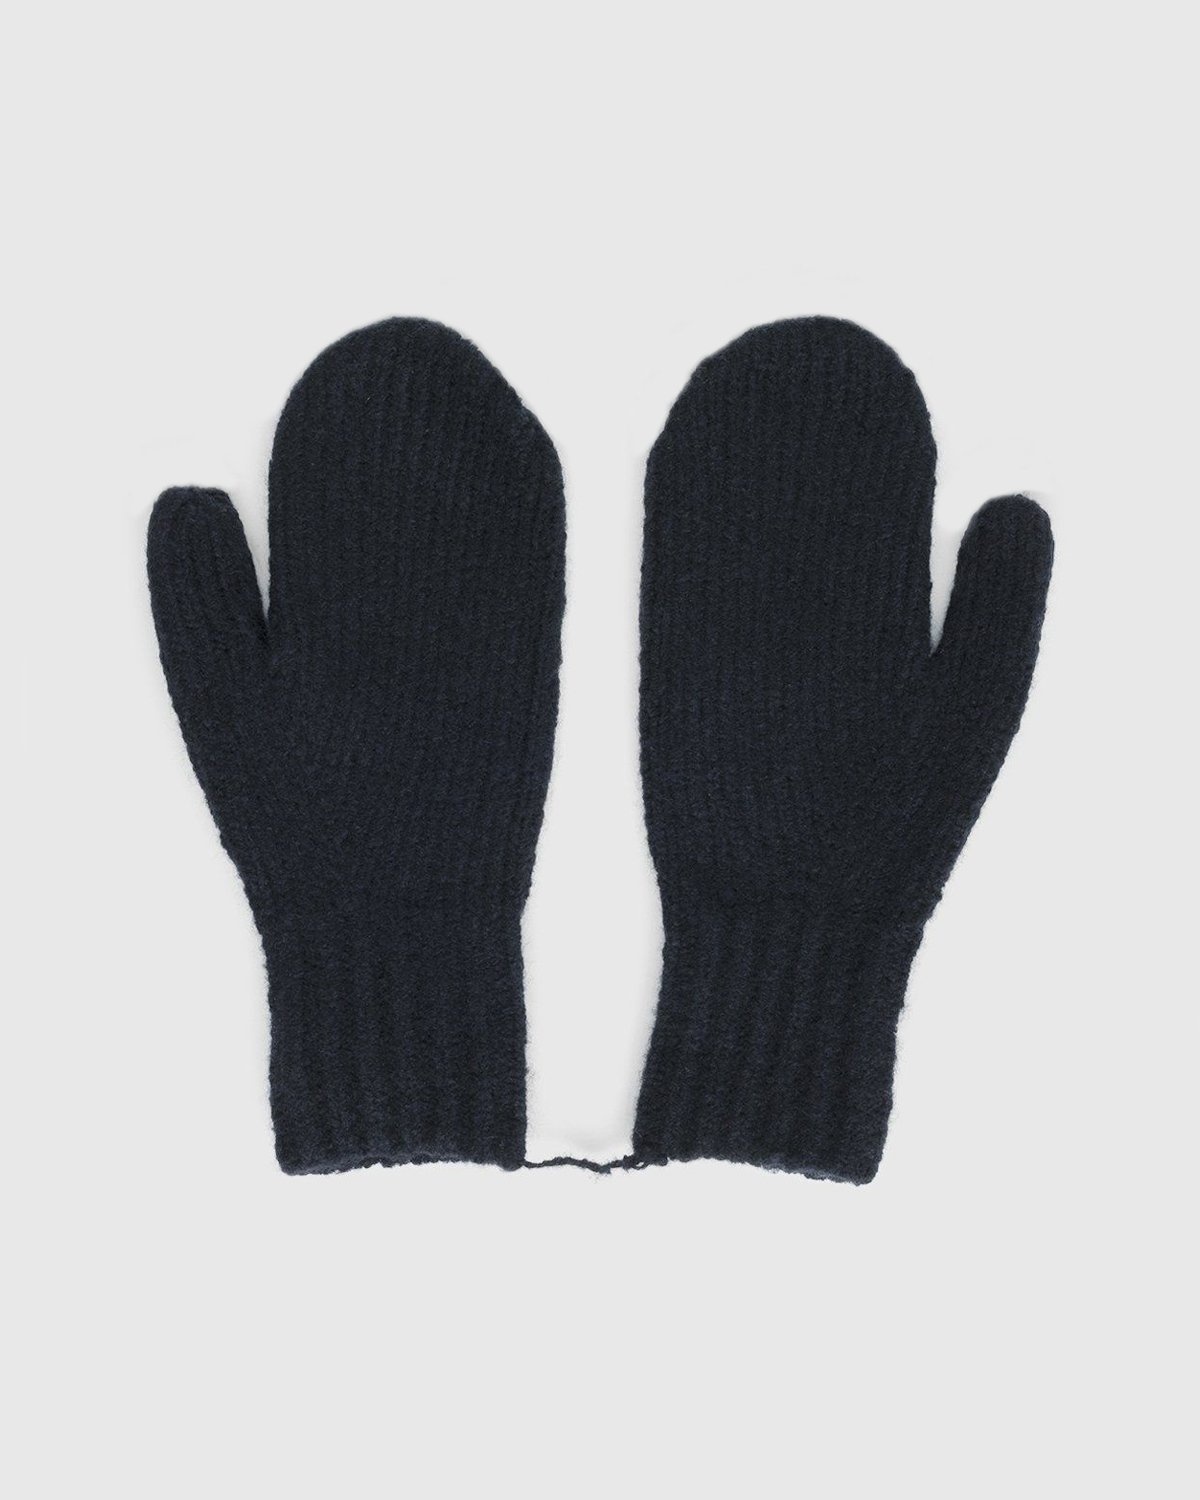 Acne Studios – Wool Blend Mittens Black - Gloves - Black - Image 1